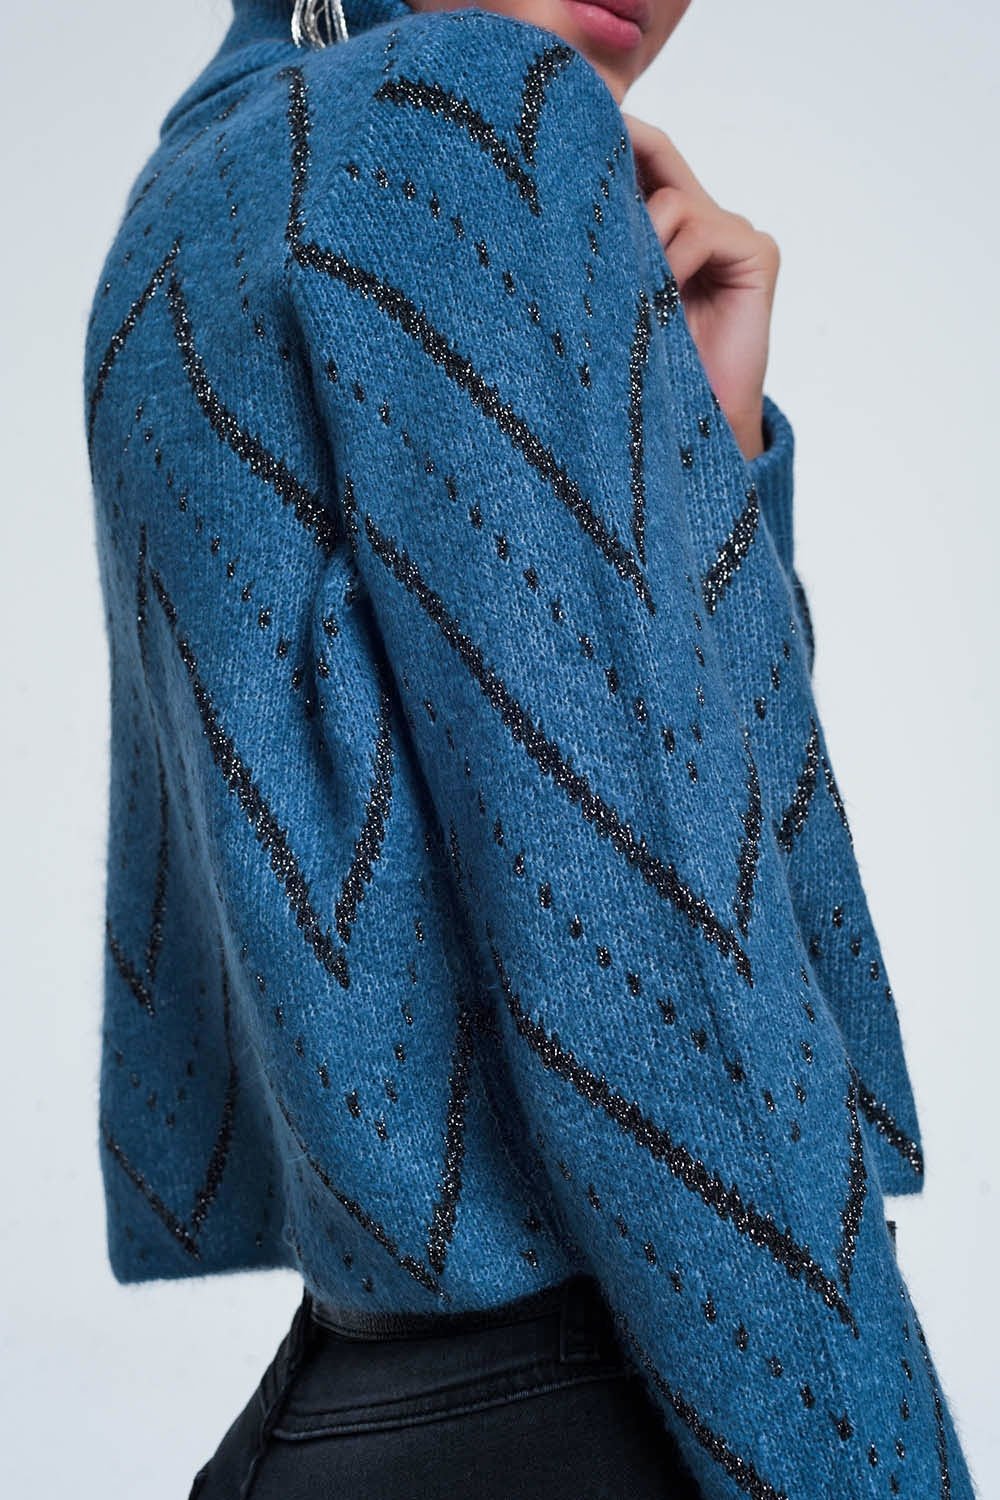 Woven Blue Turtleneck Sweater